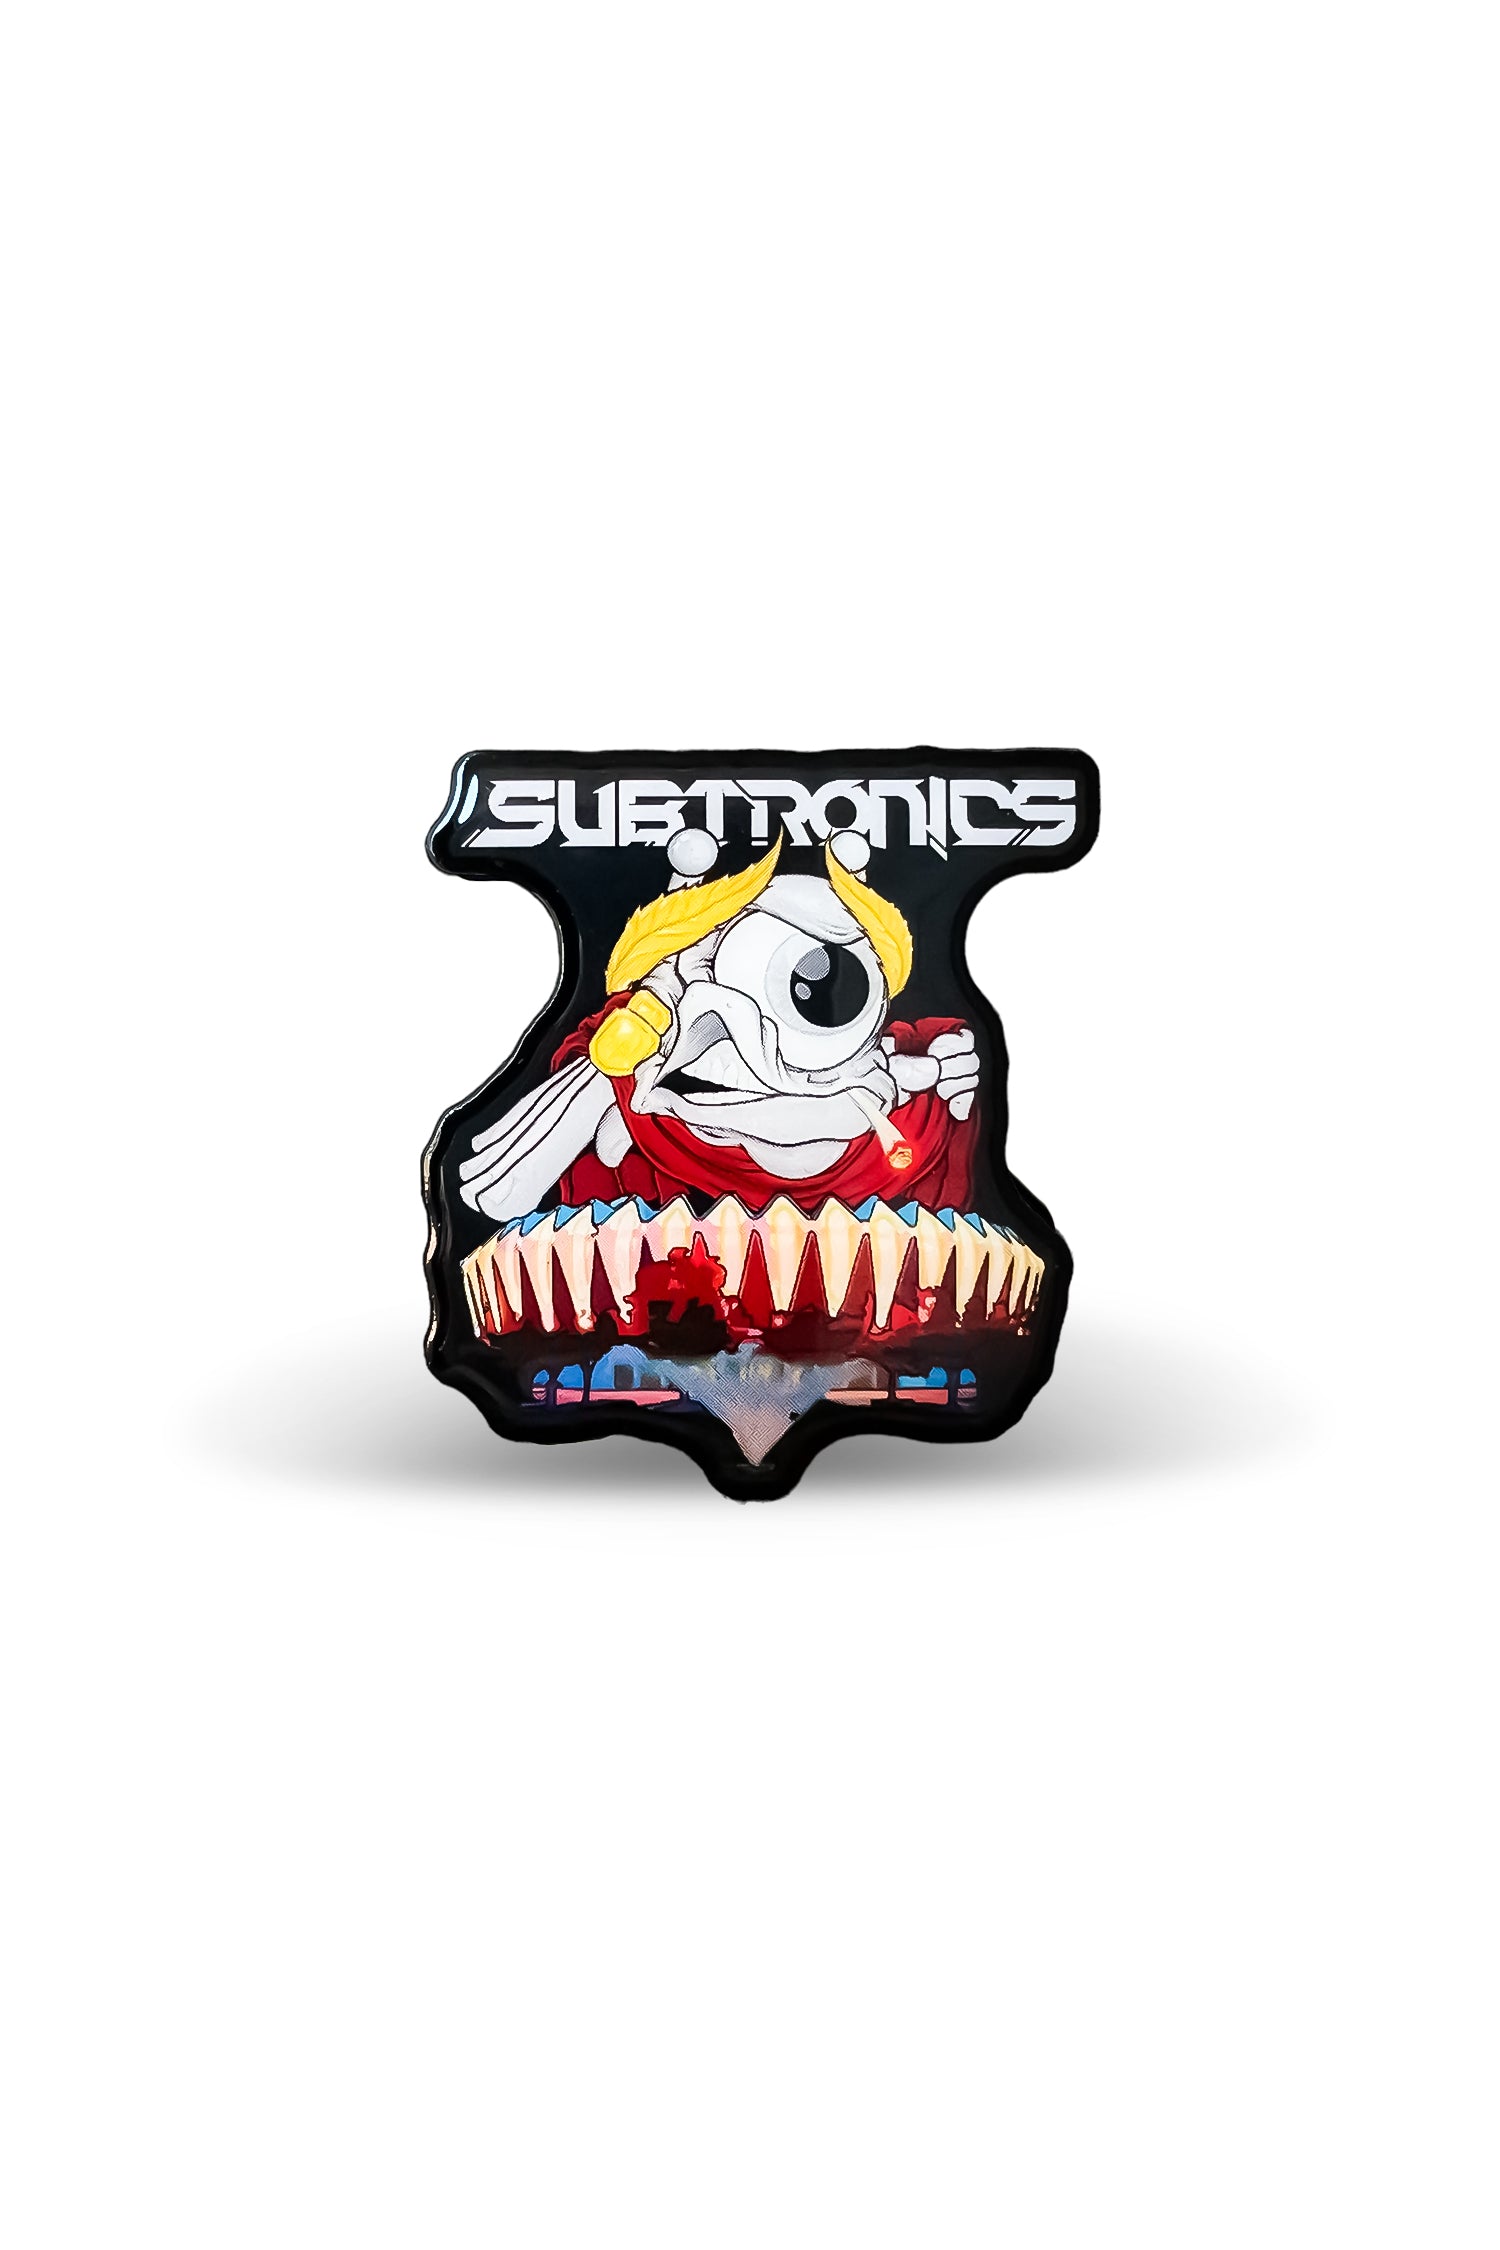 Subtronics - Cyclops Coliseum Pin